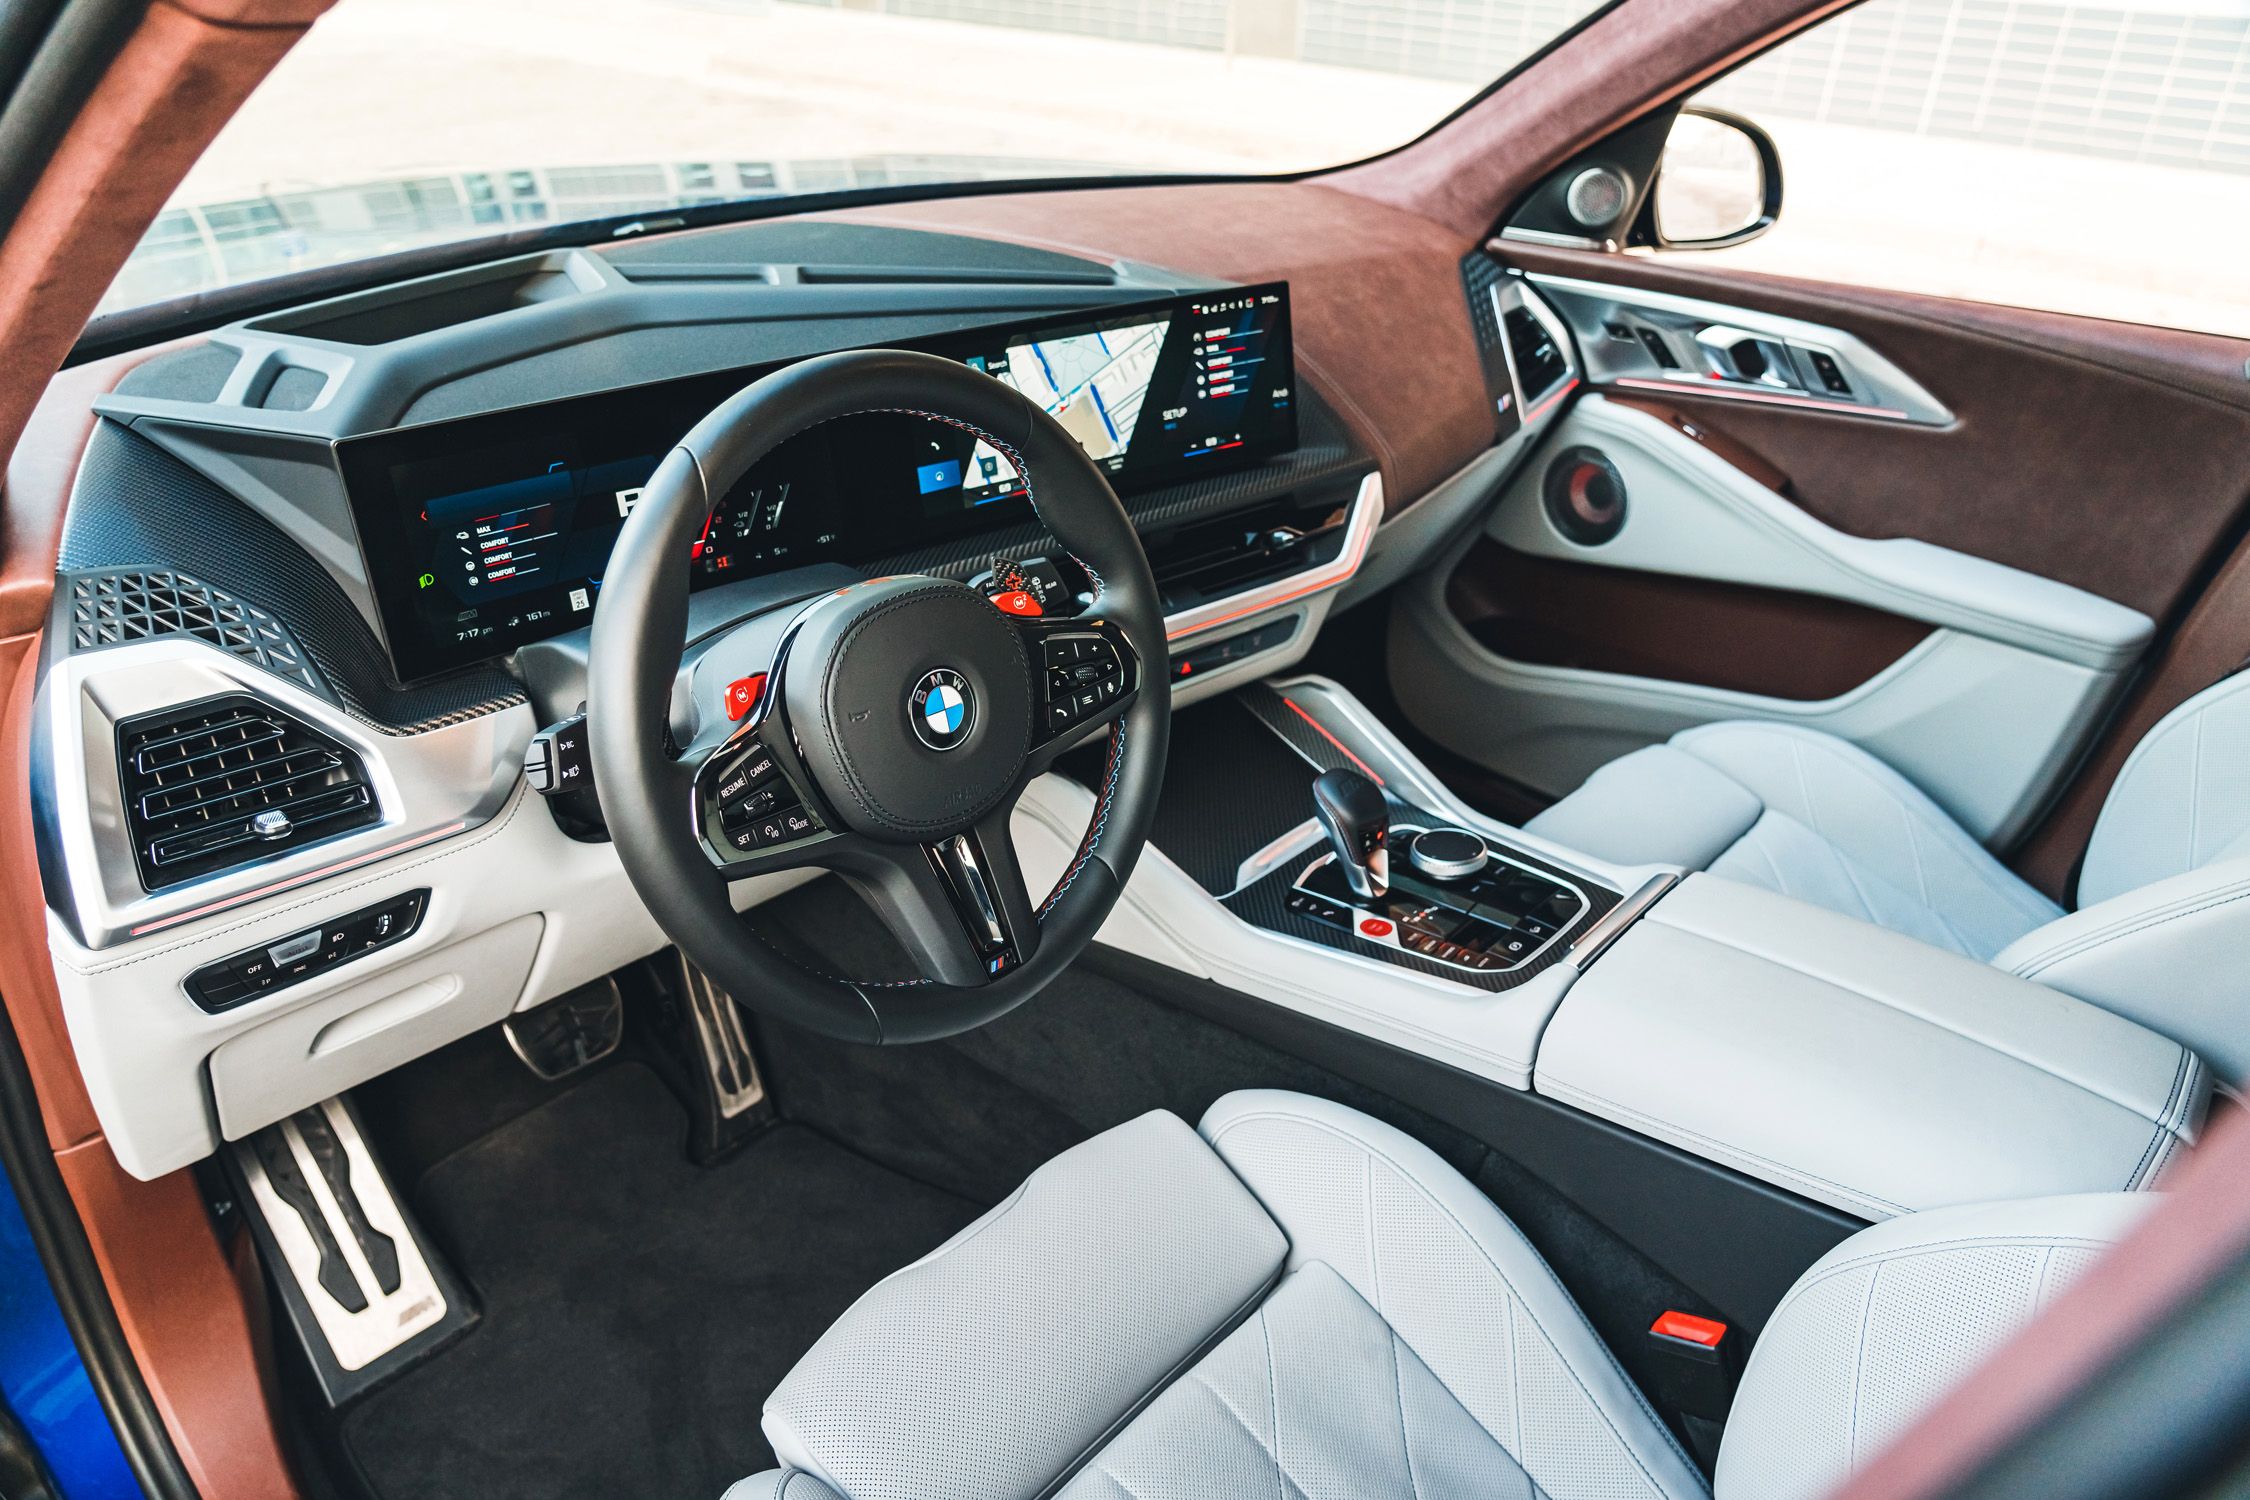 2023 BMW XM Review 